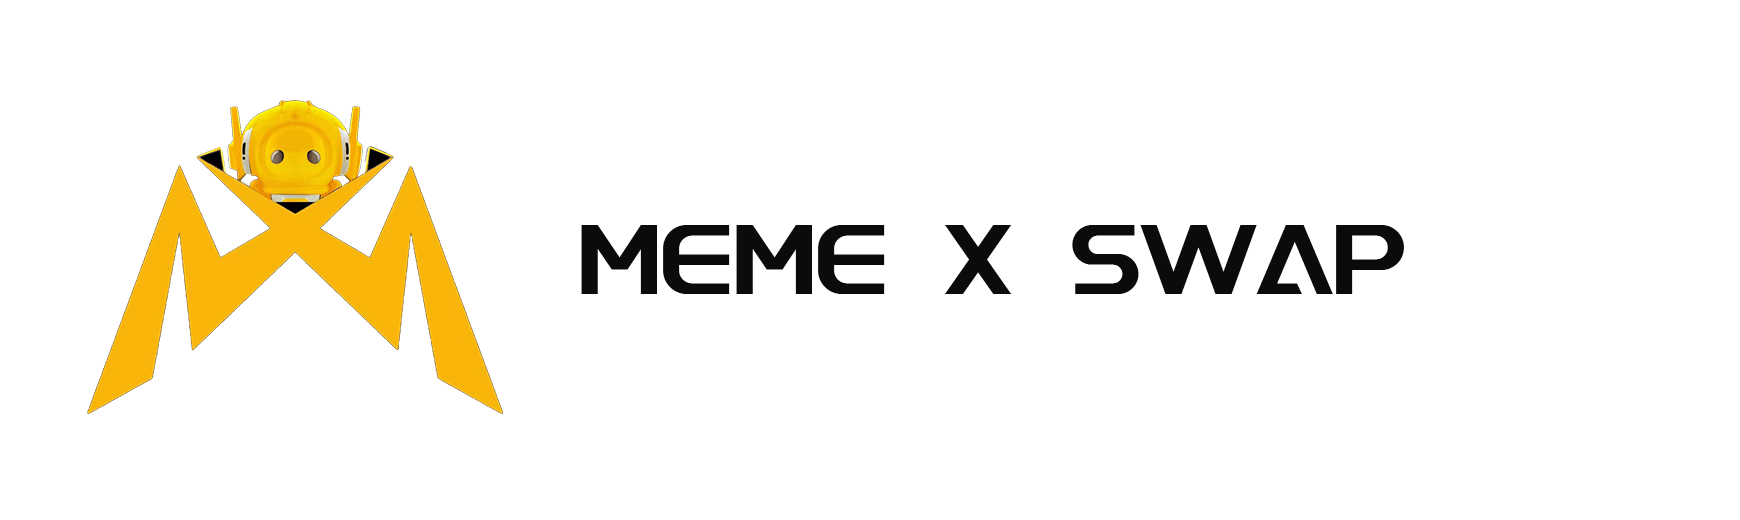 MEME X  SWAP